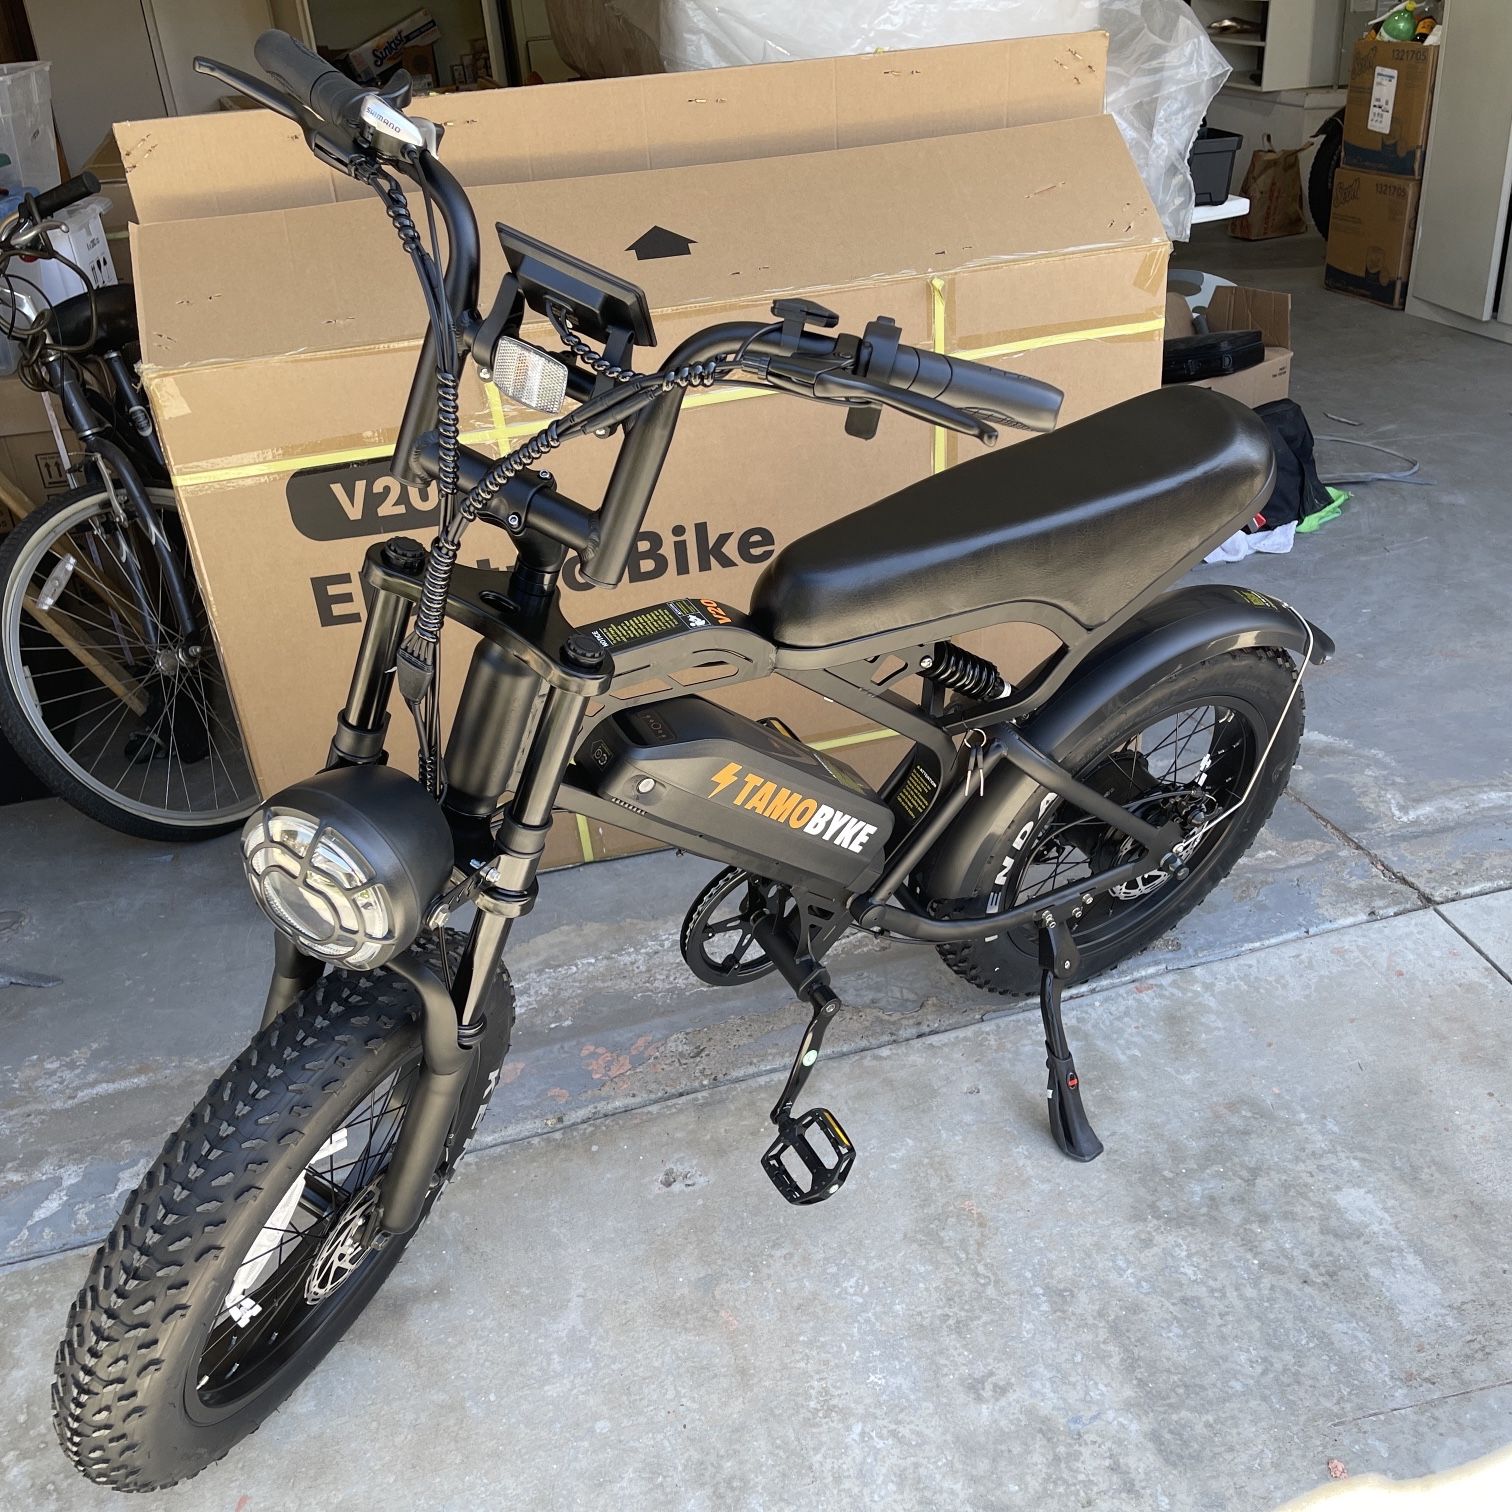 Brand New E-Bike 🏍️ ~$200 Less than On Amazon 😎